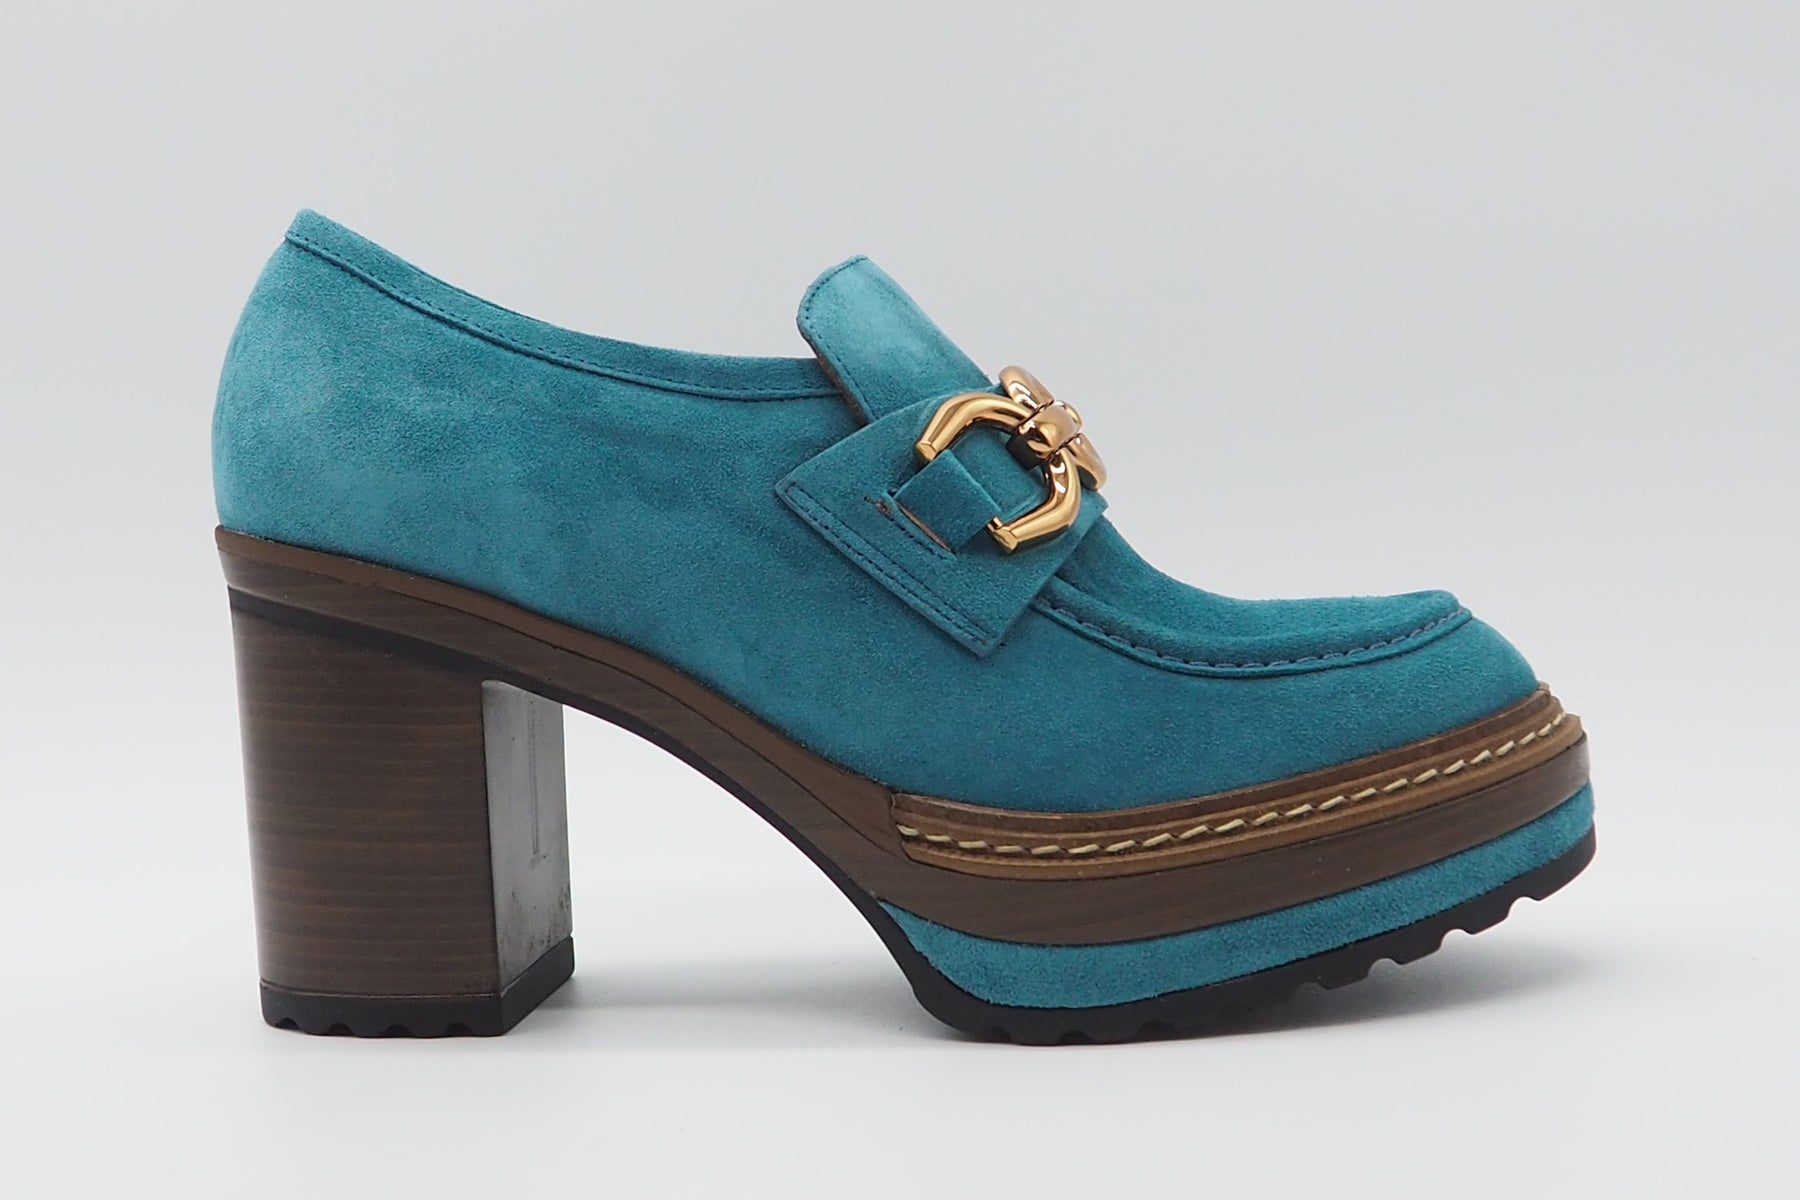 Damen Loafer aus Veloursleder in Skyblue - Absatz 8cm Damen Loafers & Schnürer Pons Quintana